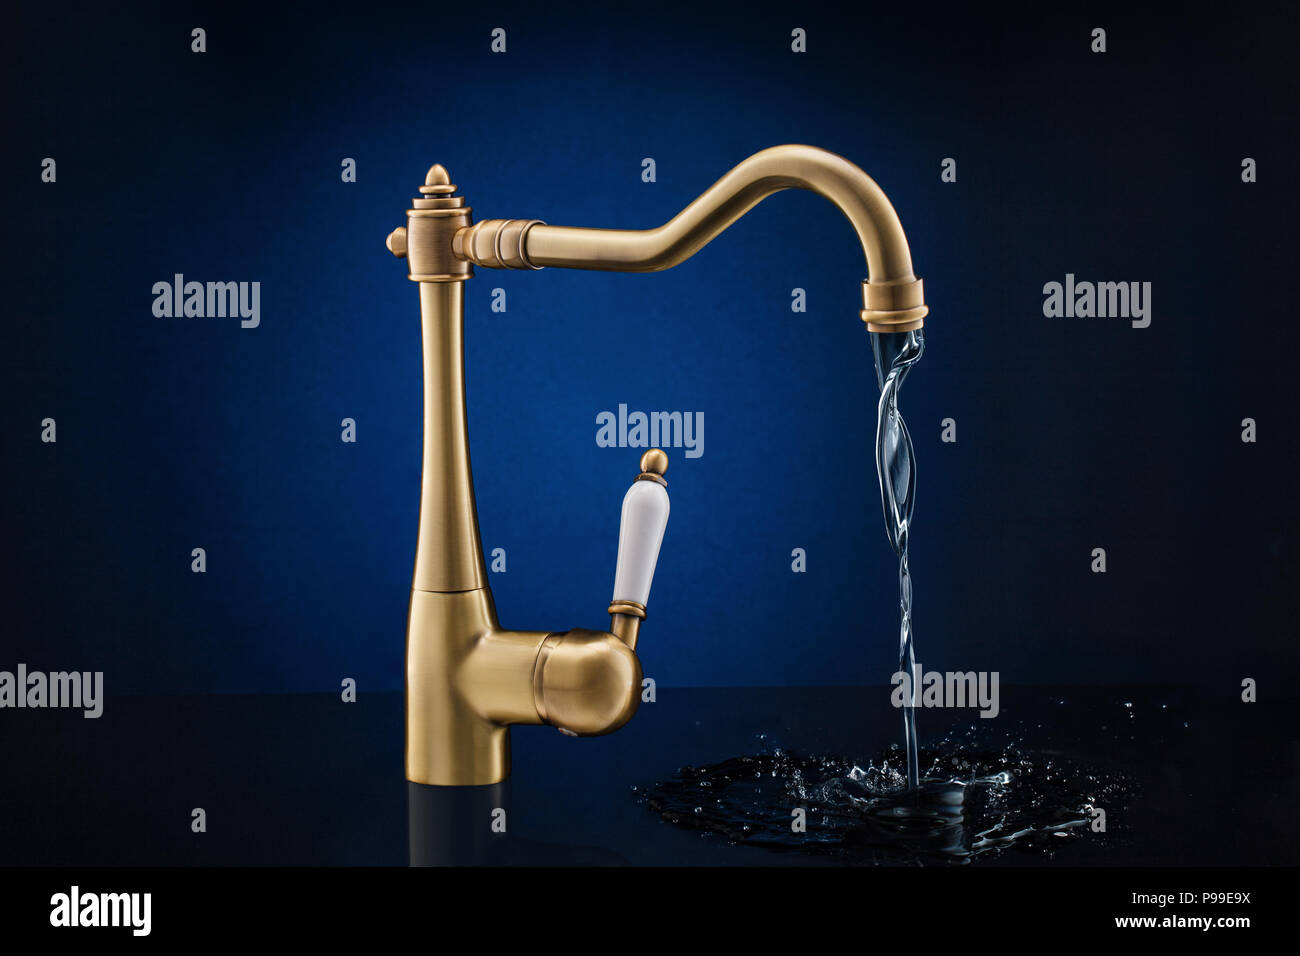 Modern kitchen faucet against dark blue background. Stock Photo